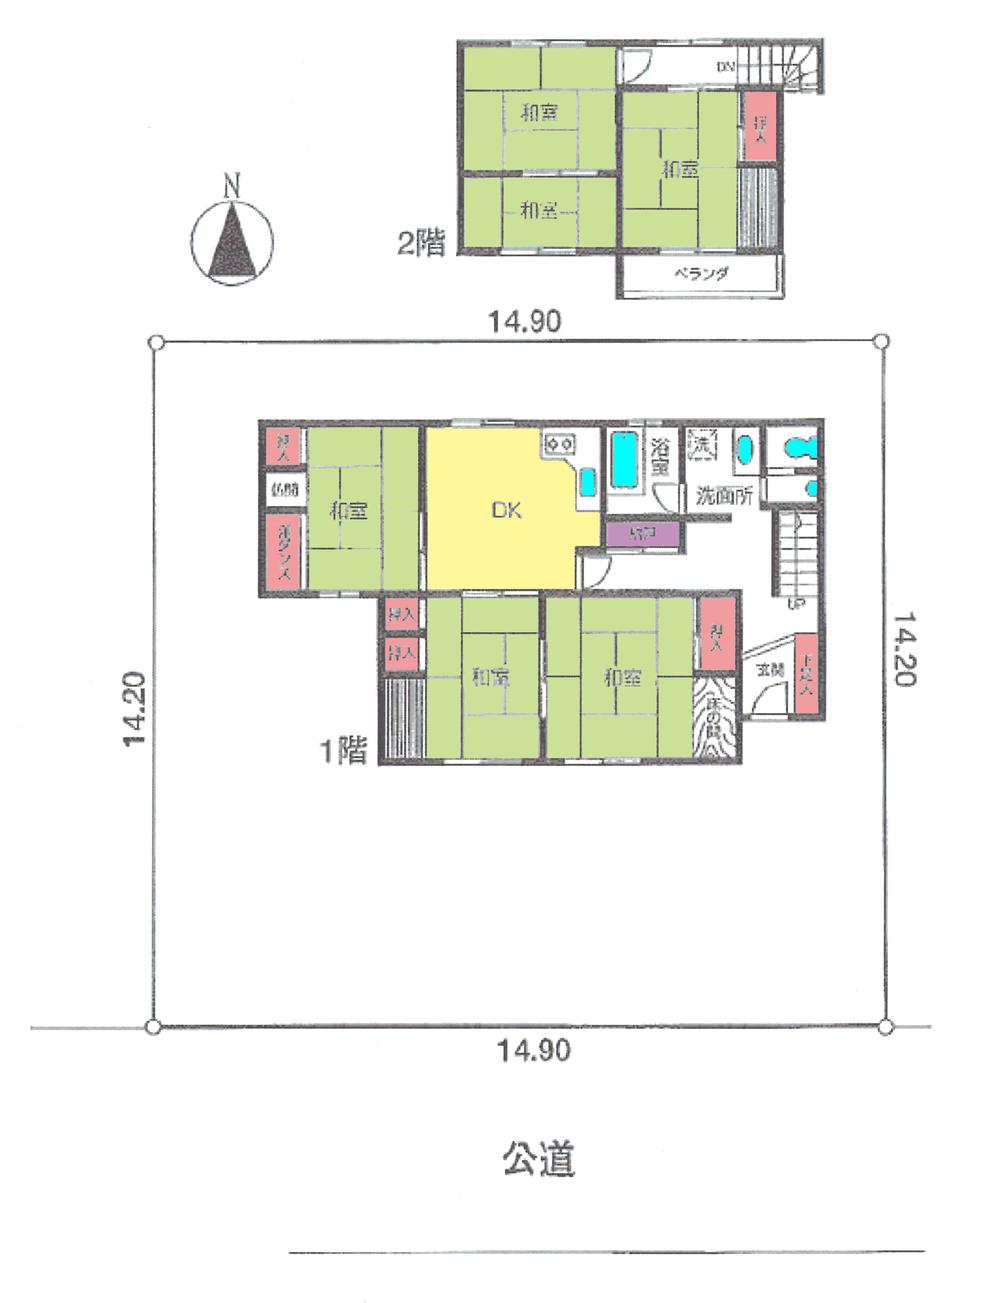 Floor plan. 37 million yen, 6DK, Land area 211.58 sq m , Building area 108.47 sq m floor plan